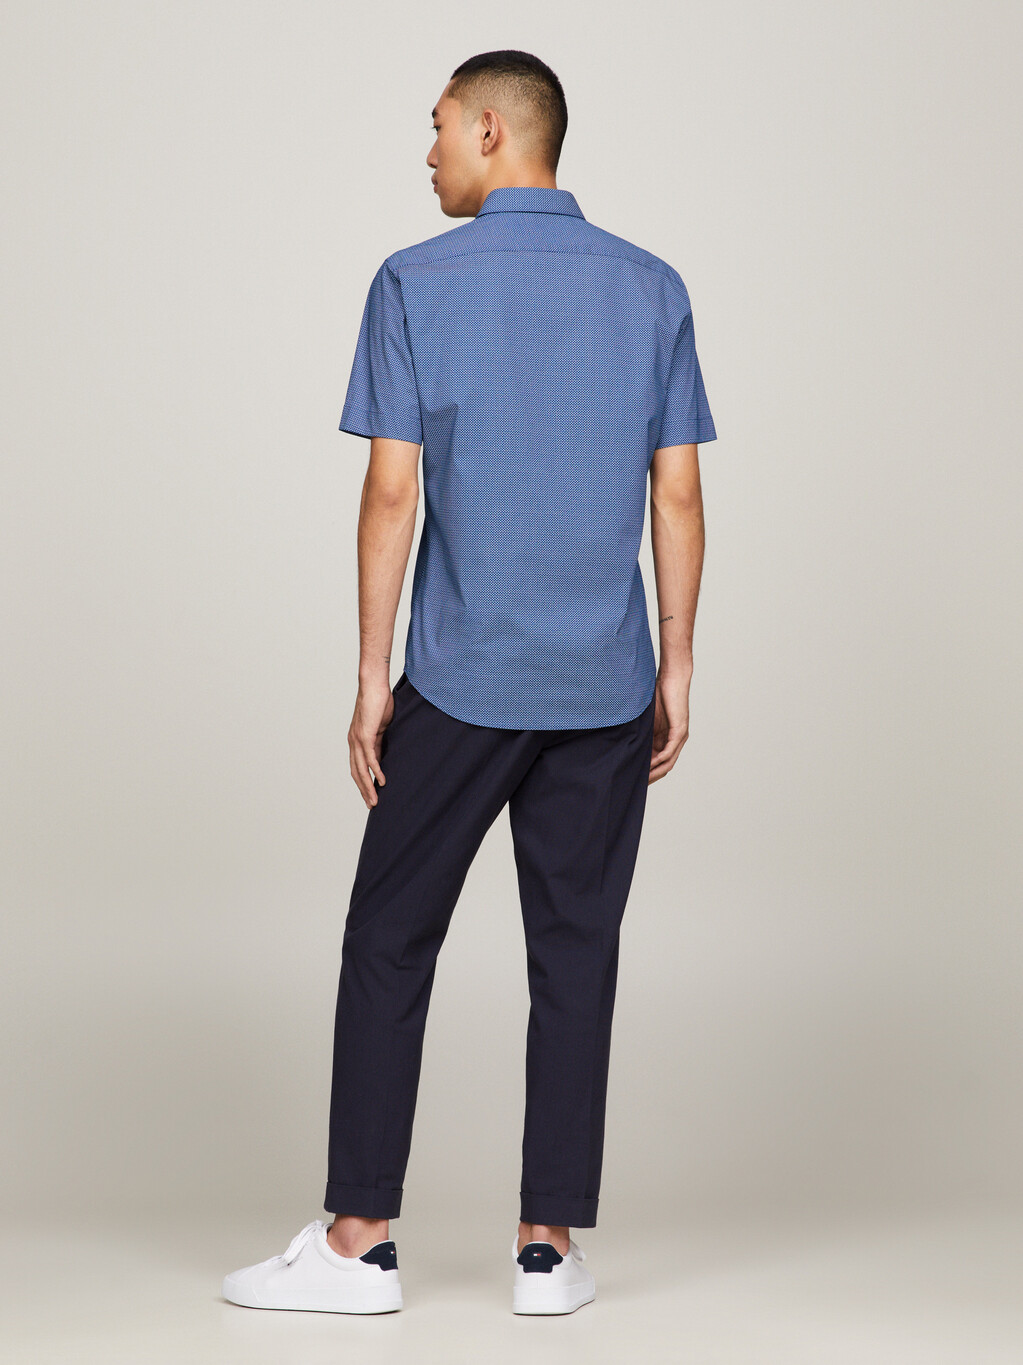 Micro Print Short Sleeve Regular Shirt, Anchor Blue / Optic White, hi-res